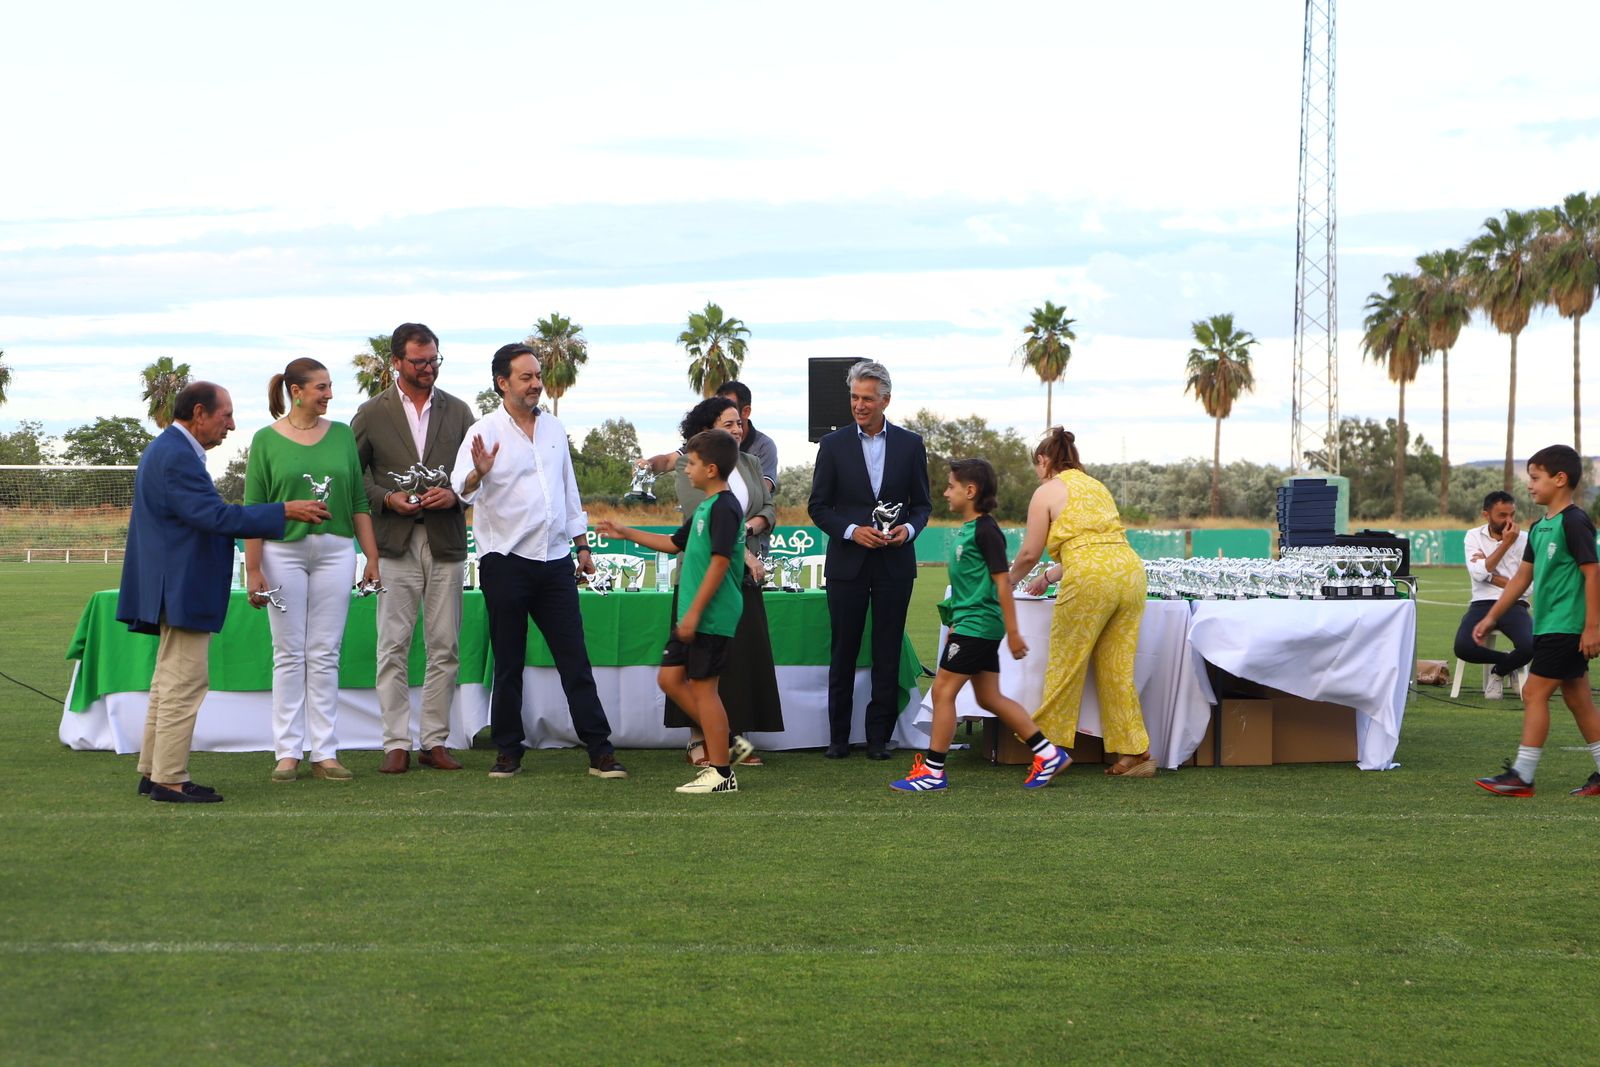 La fiesta final de la cantera del Córdoba CF, en imágenes